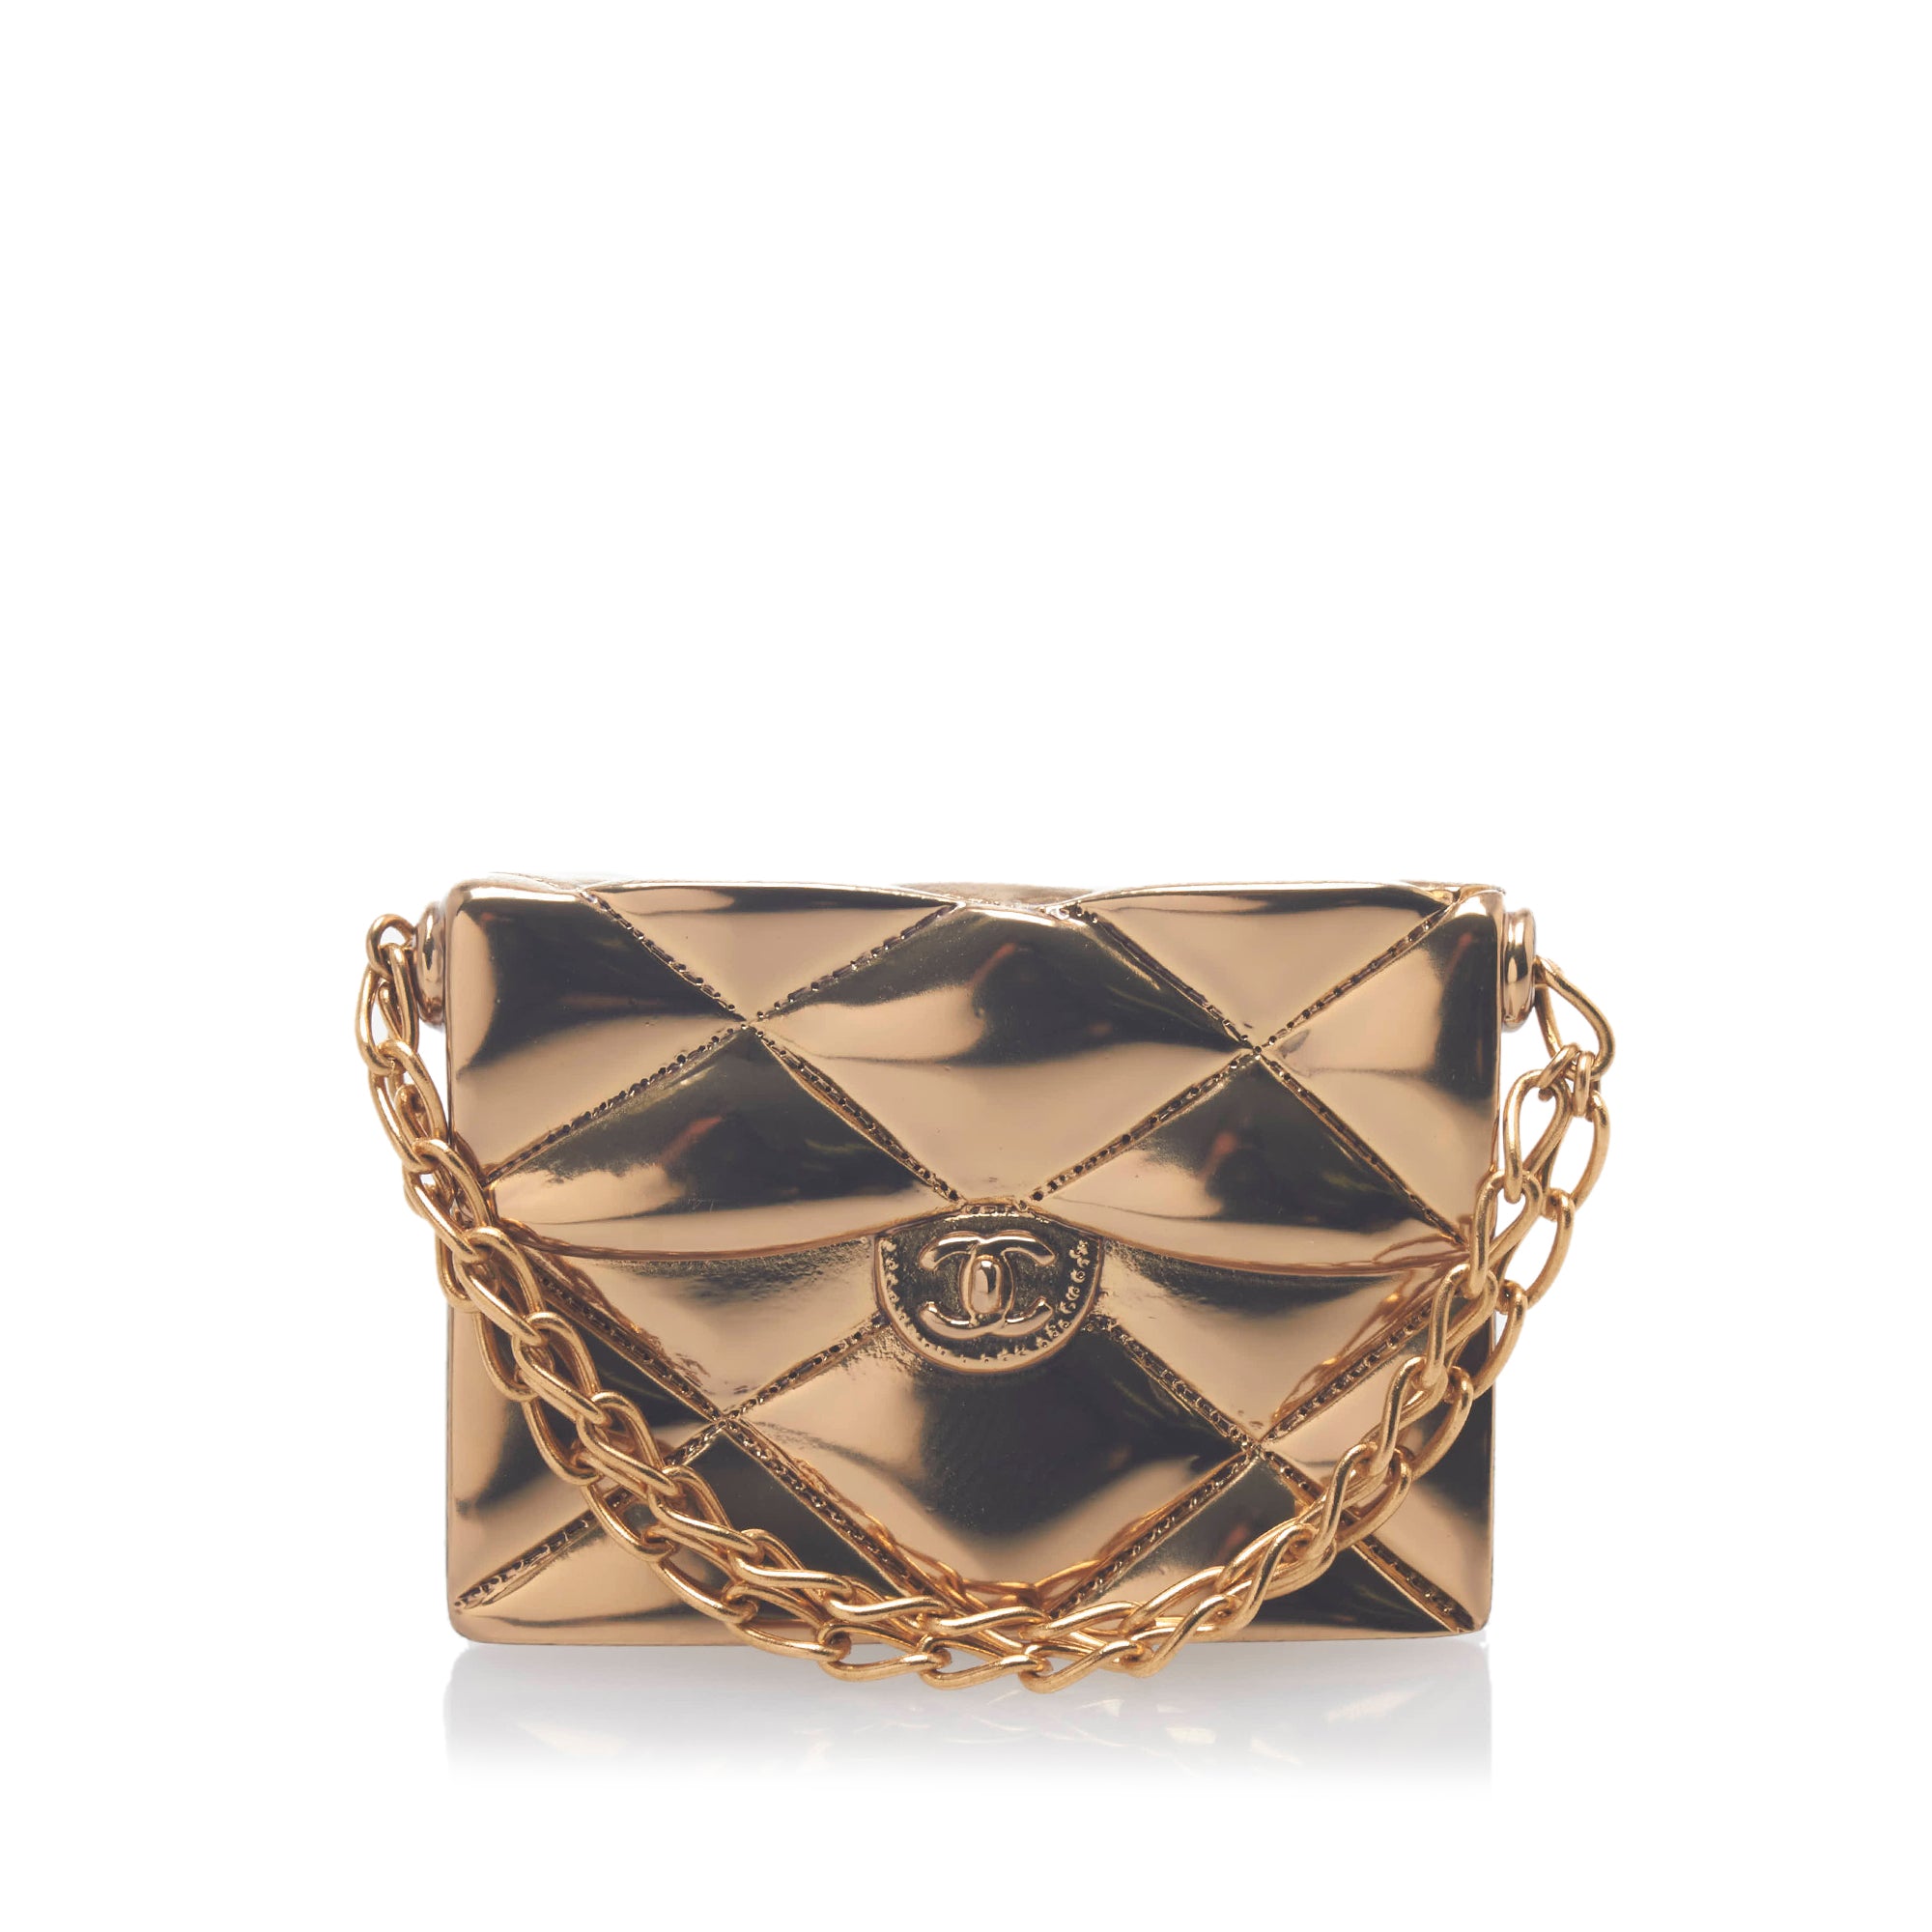 Chanel Gold Lambskin Leather Matelasse Zip Around Long Wallet